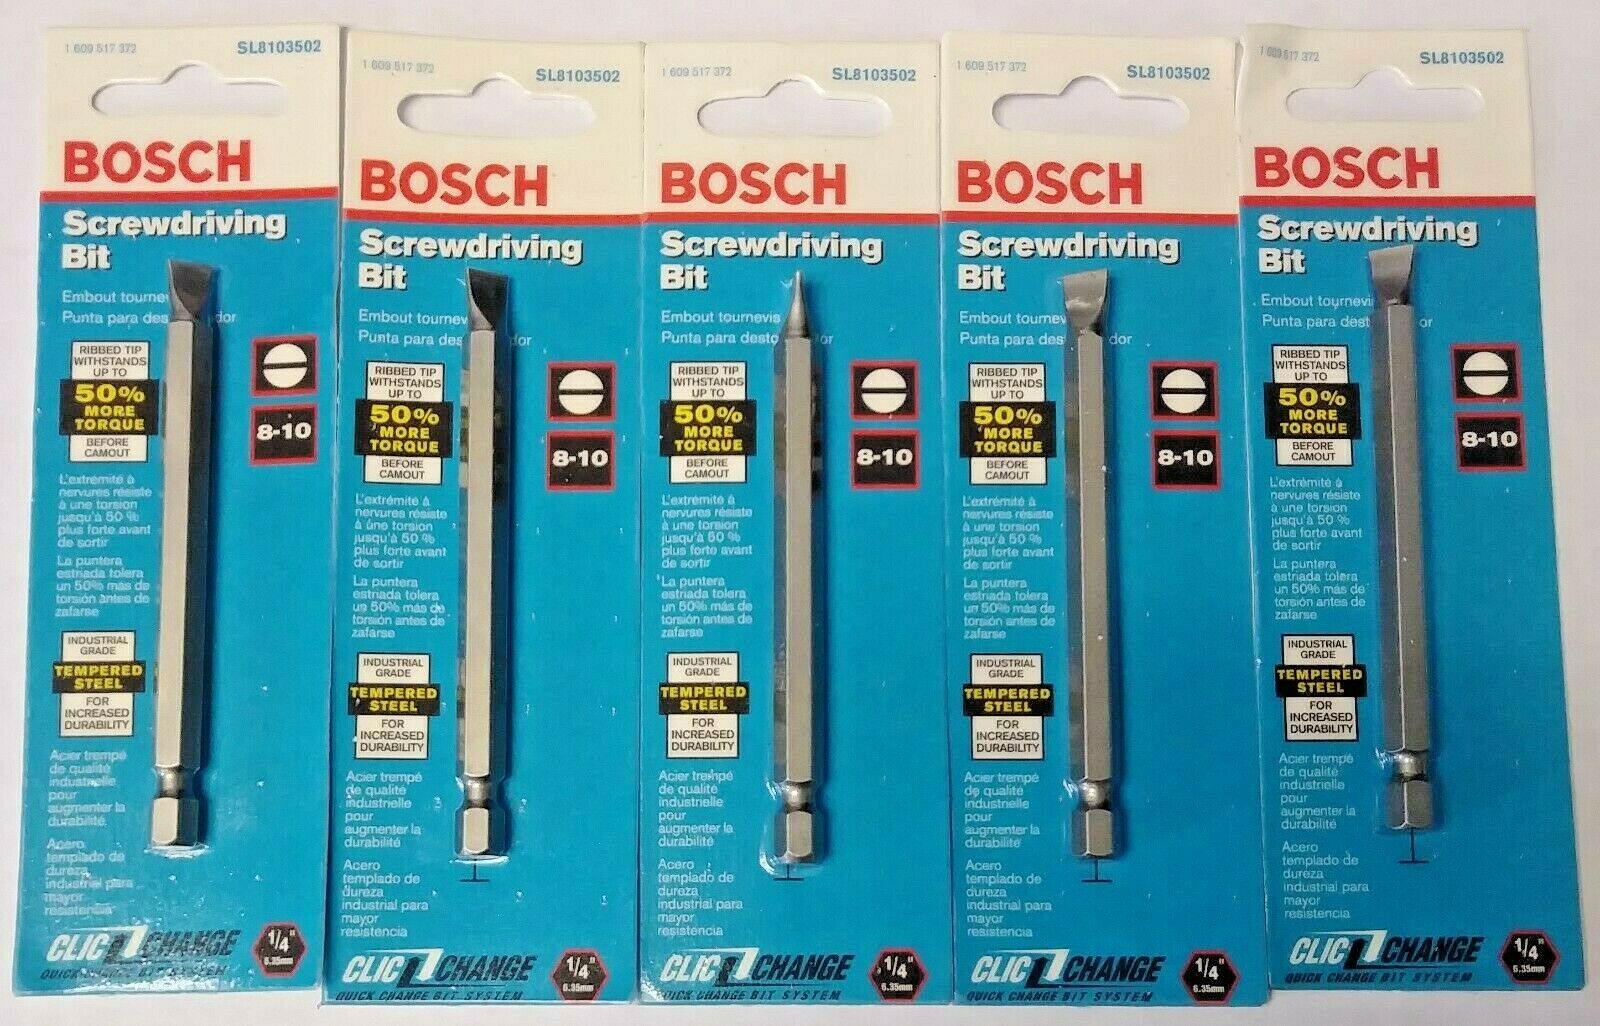 Bosch SL8103502 8-10 Slotted 3-1/2" Clic-Change Screwdriving Bit (5 Packs) USA